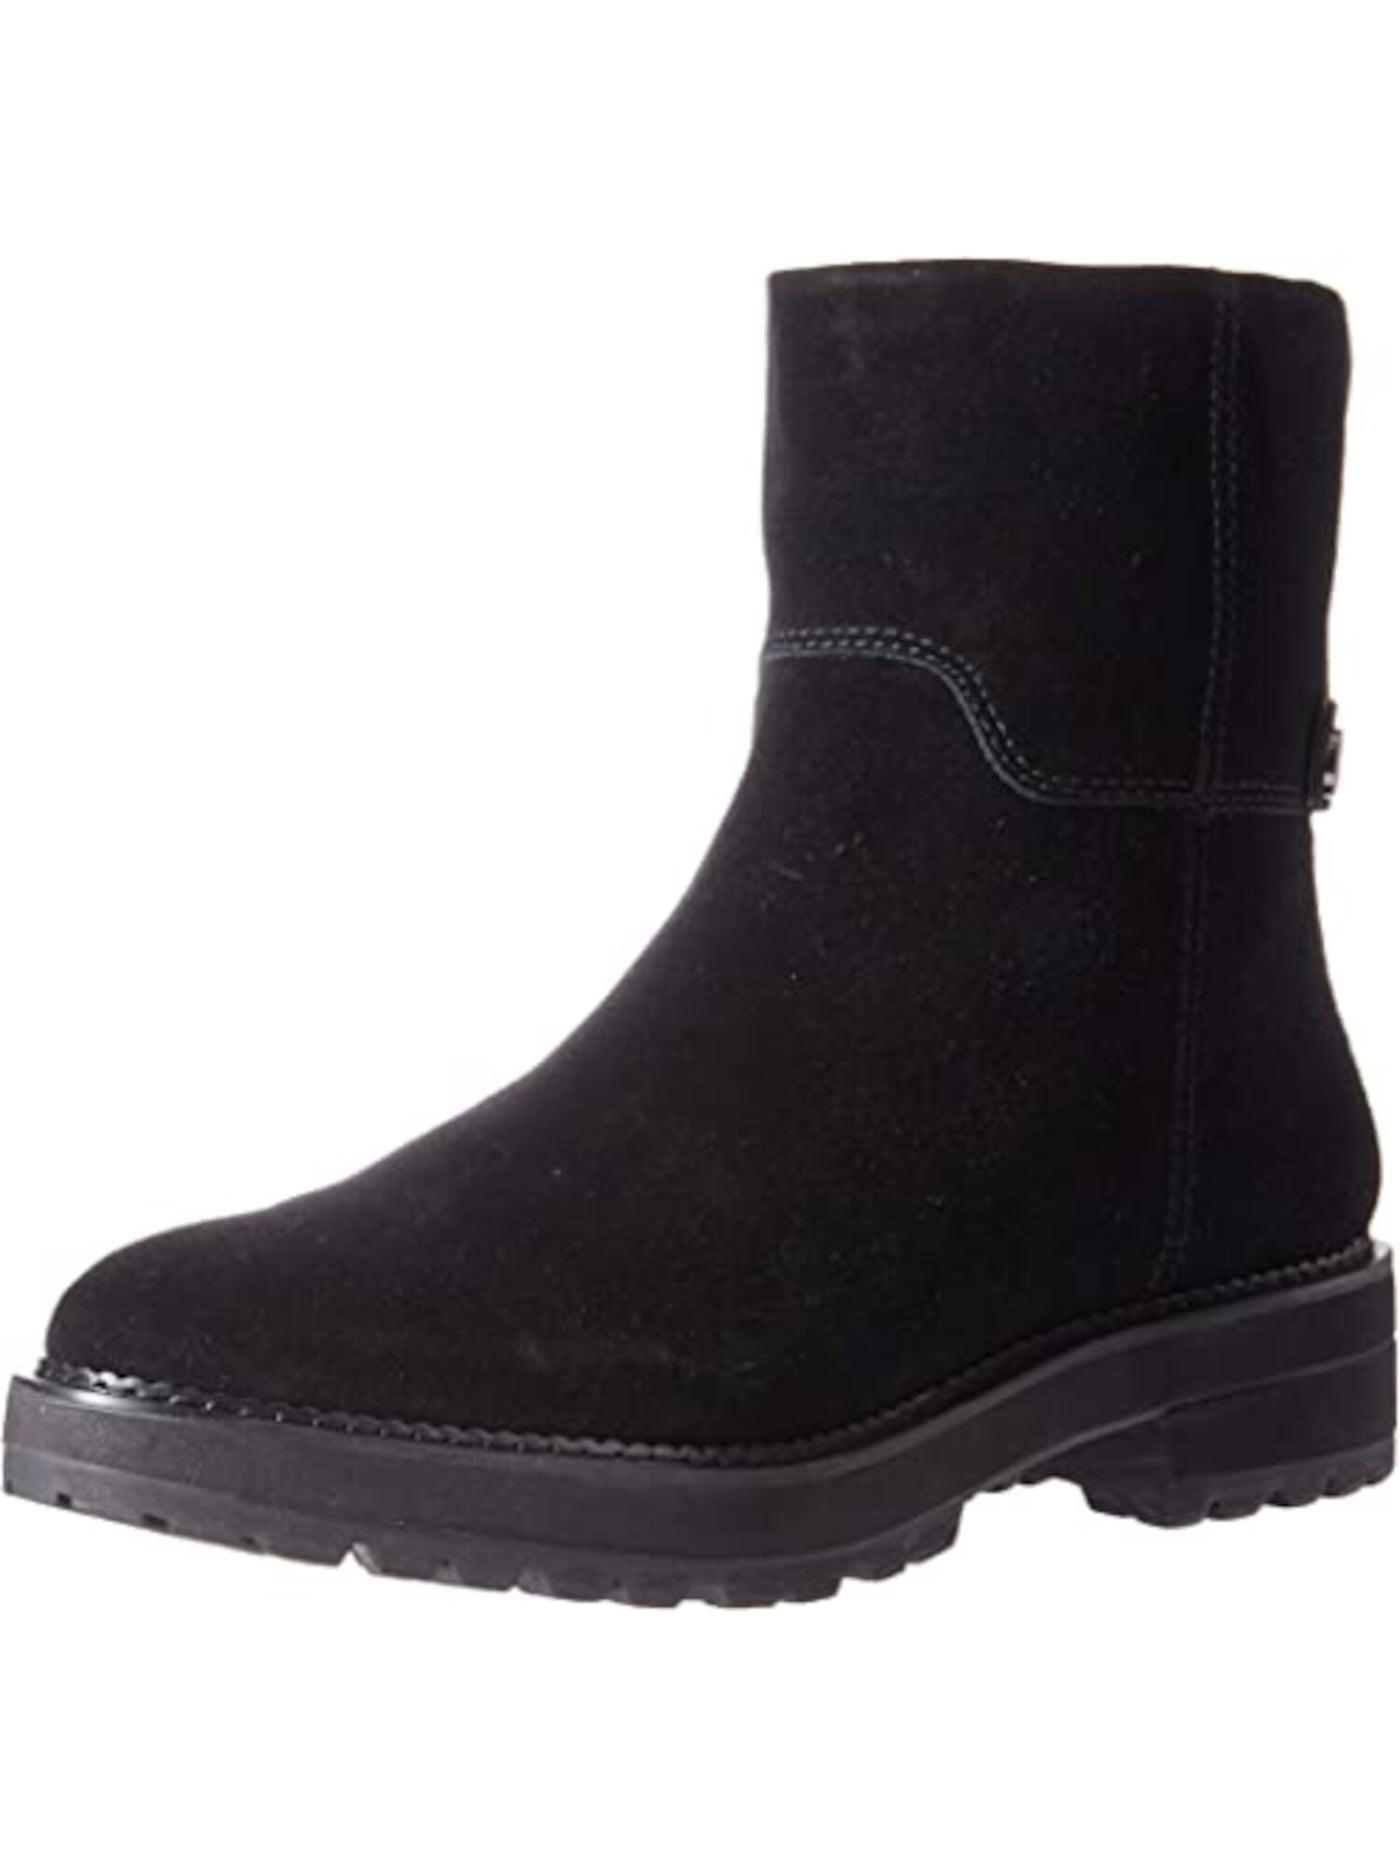 FRANCO SARTO Womens Black Lug Sole Waterproof Roalba 2 Round Toe Block Heel Zip-Up Boots Shoes 5 M